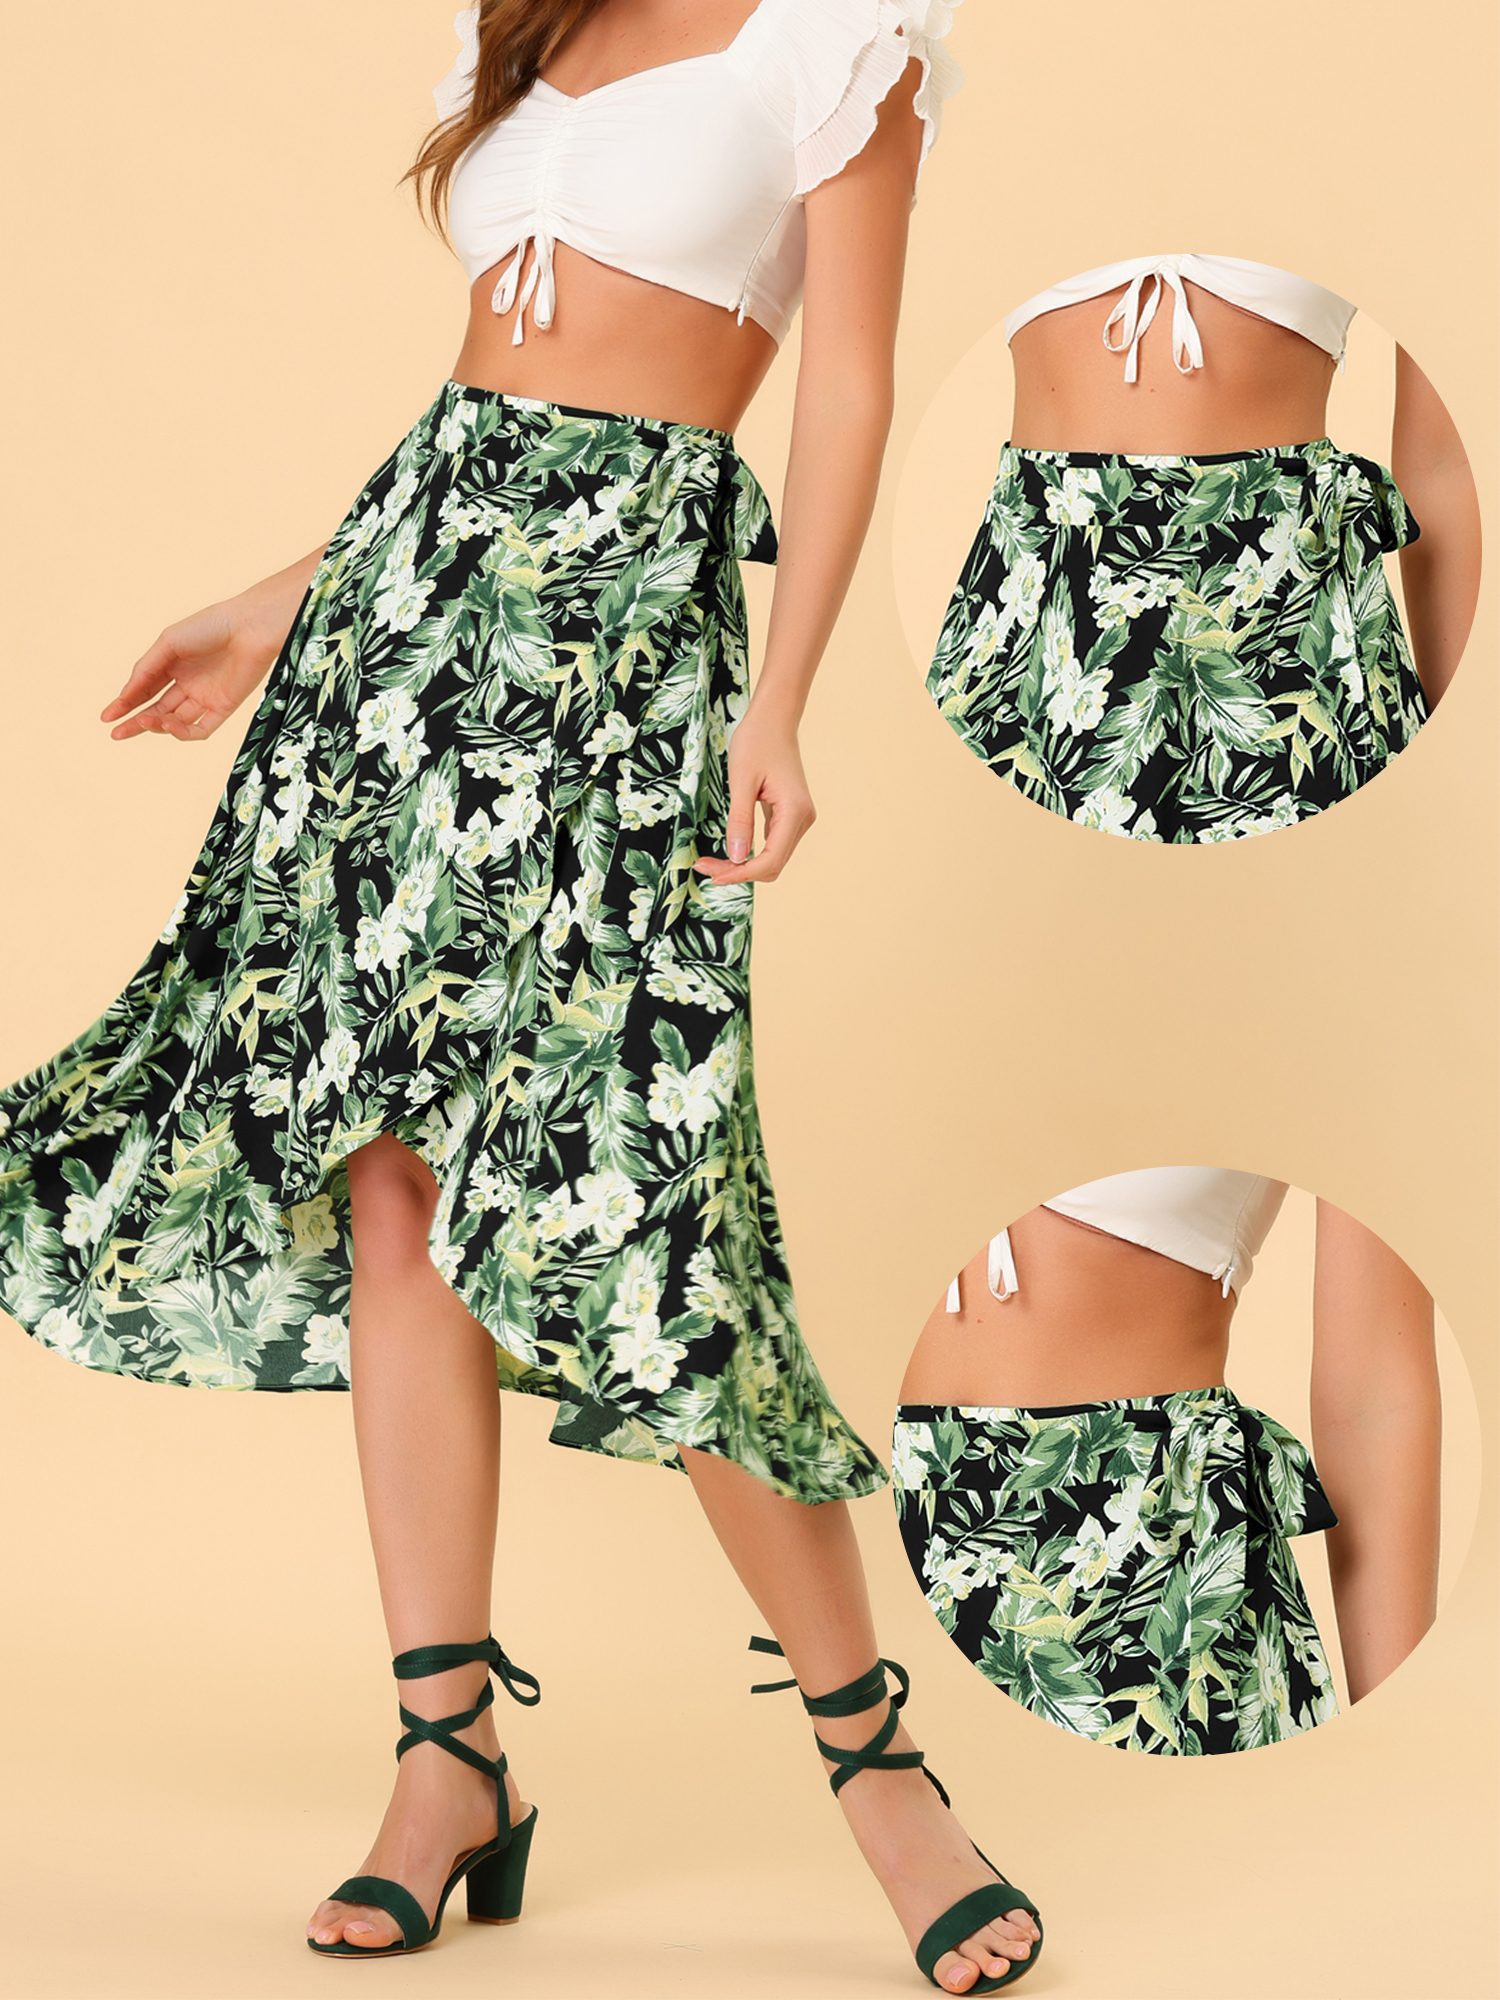 Unique Bargains Floral Skirt for Women's Hawaiian Tropical Boho Wrap Midi Skirt